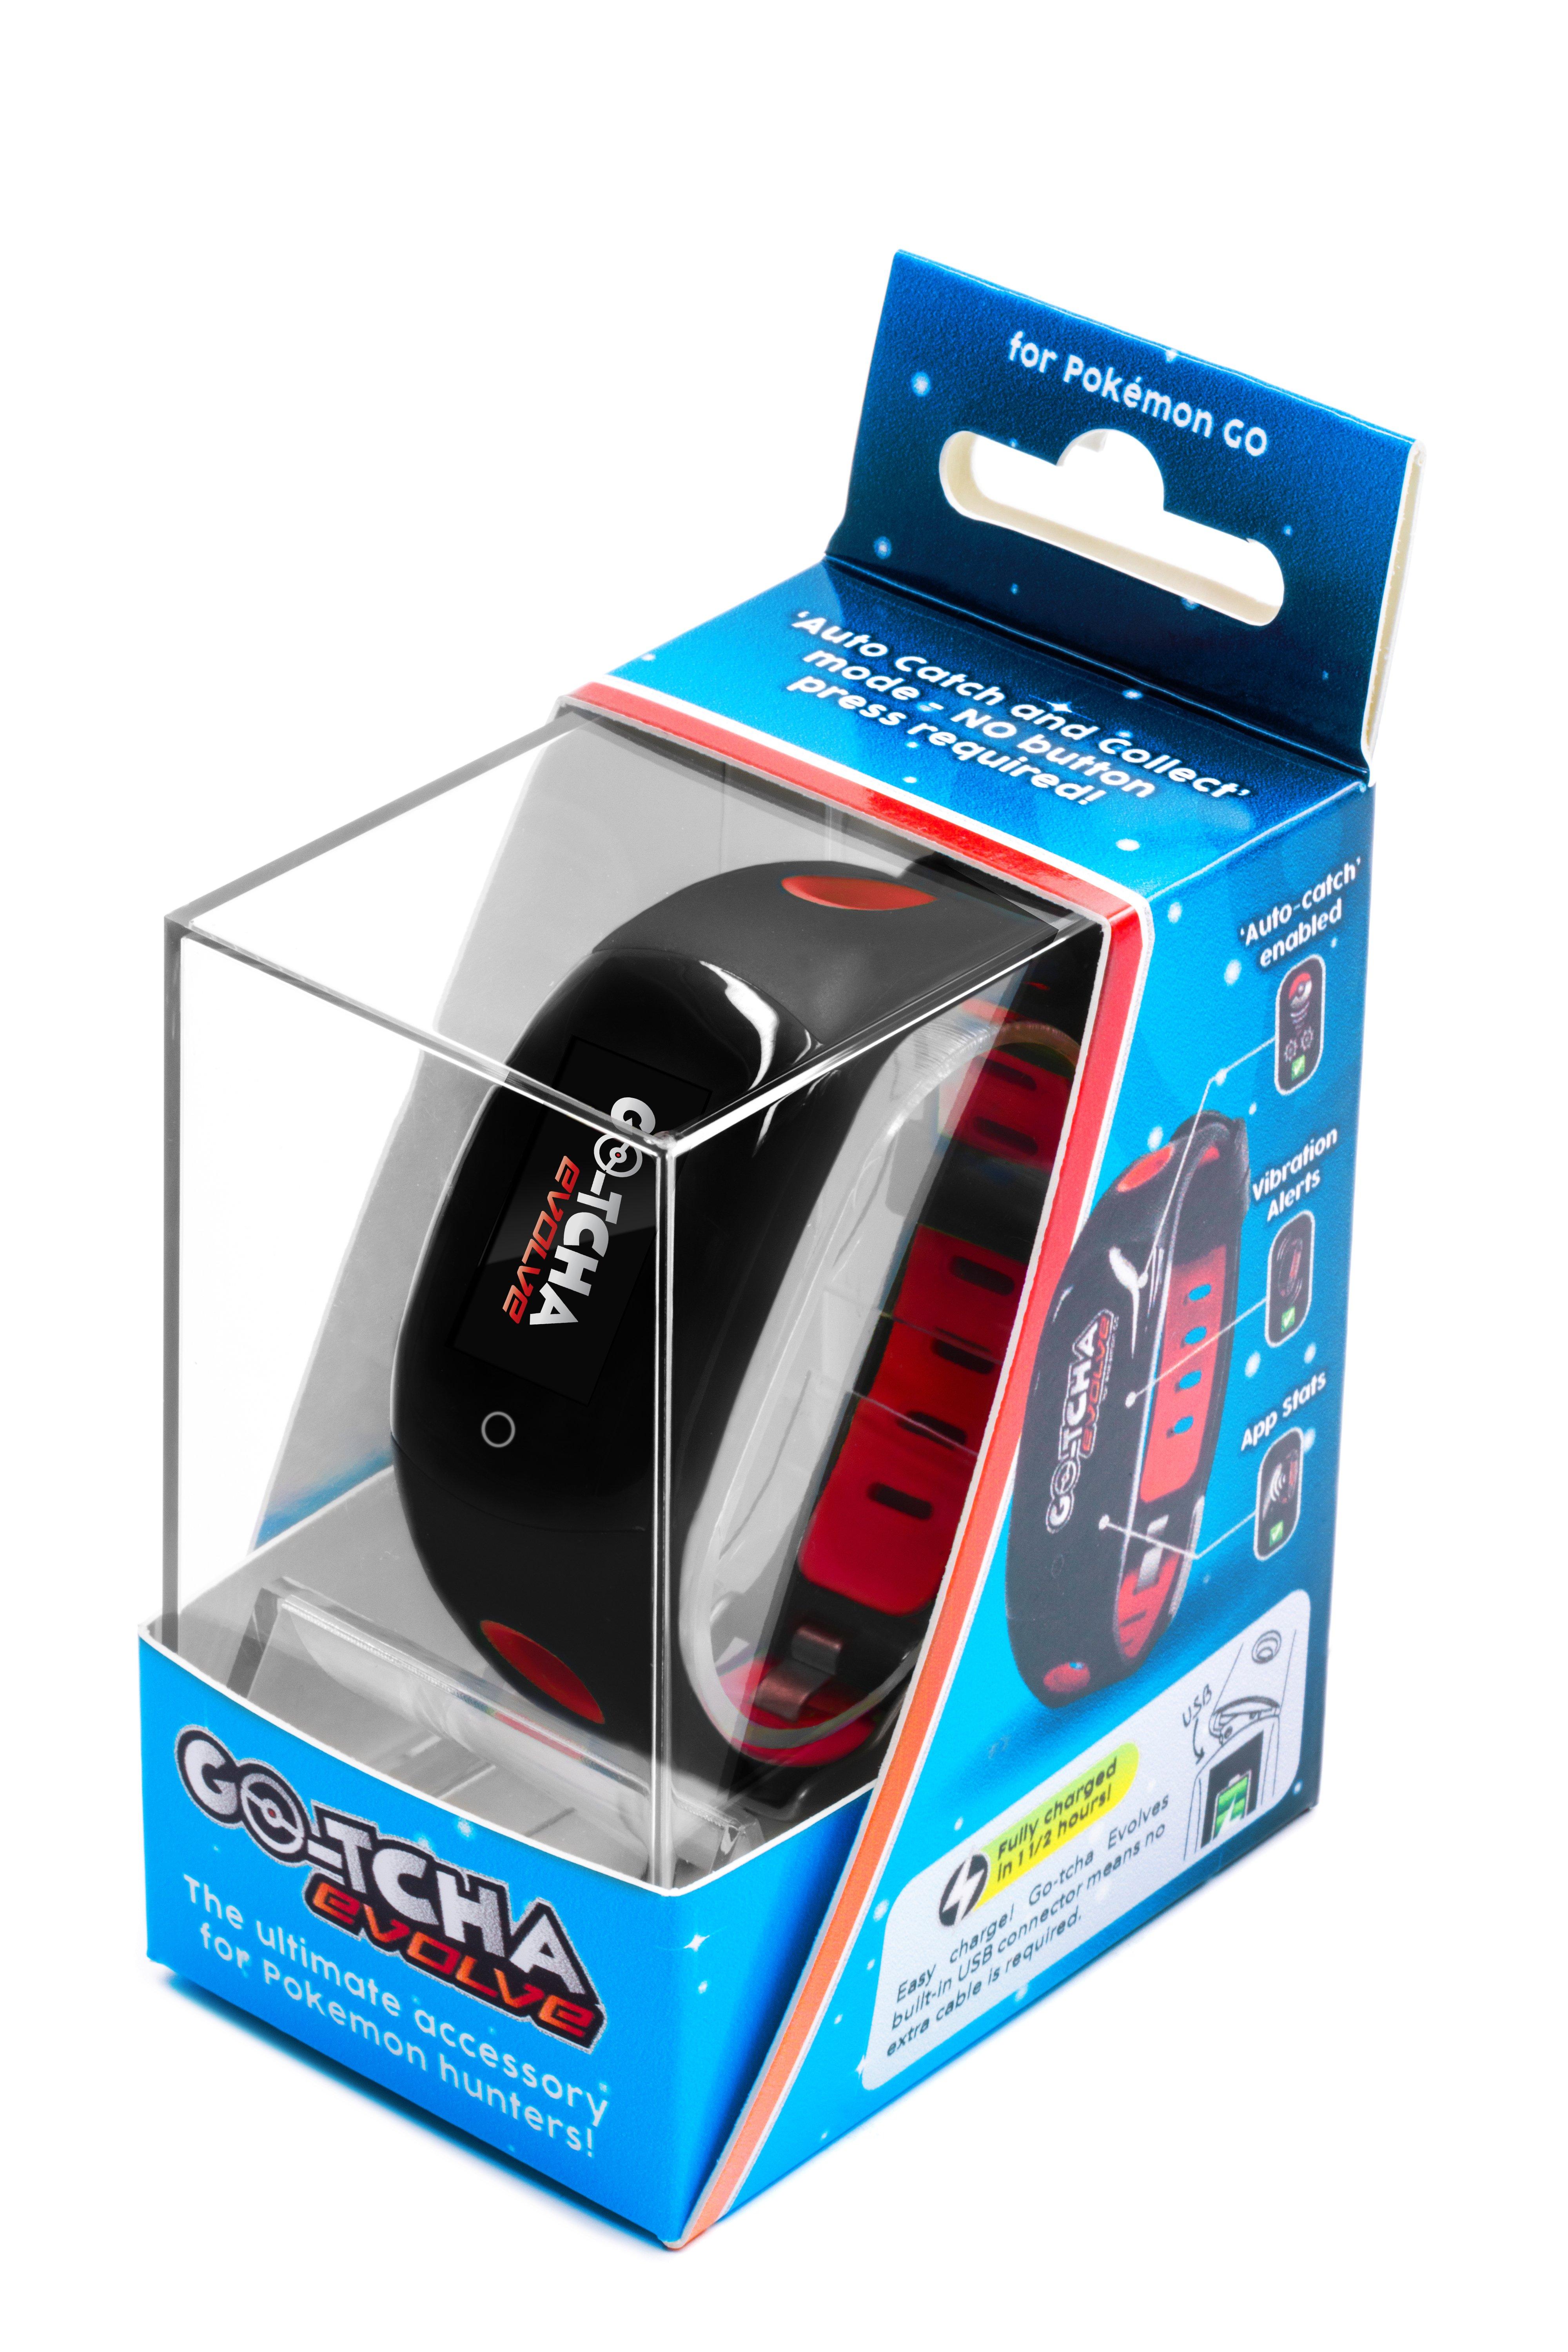 Go-Tcha LED-Touch-Wristband for Pokémon Go OEM 